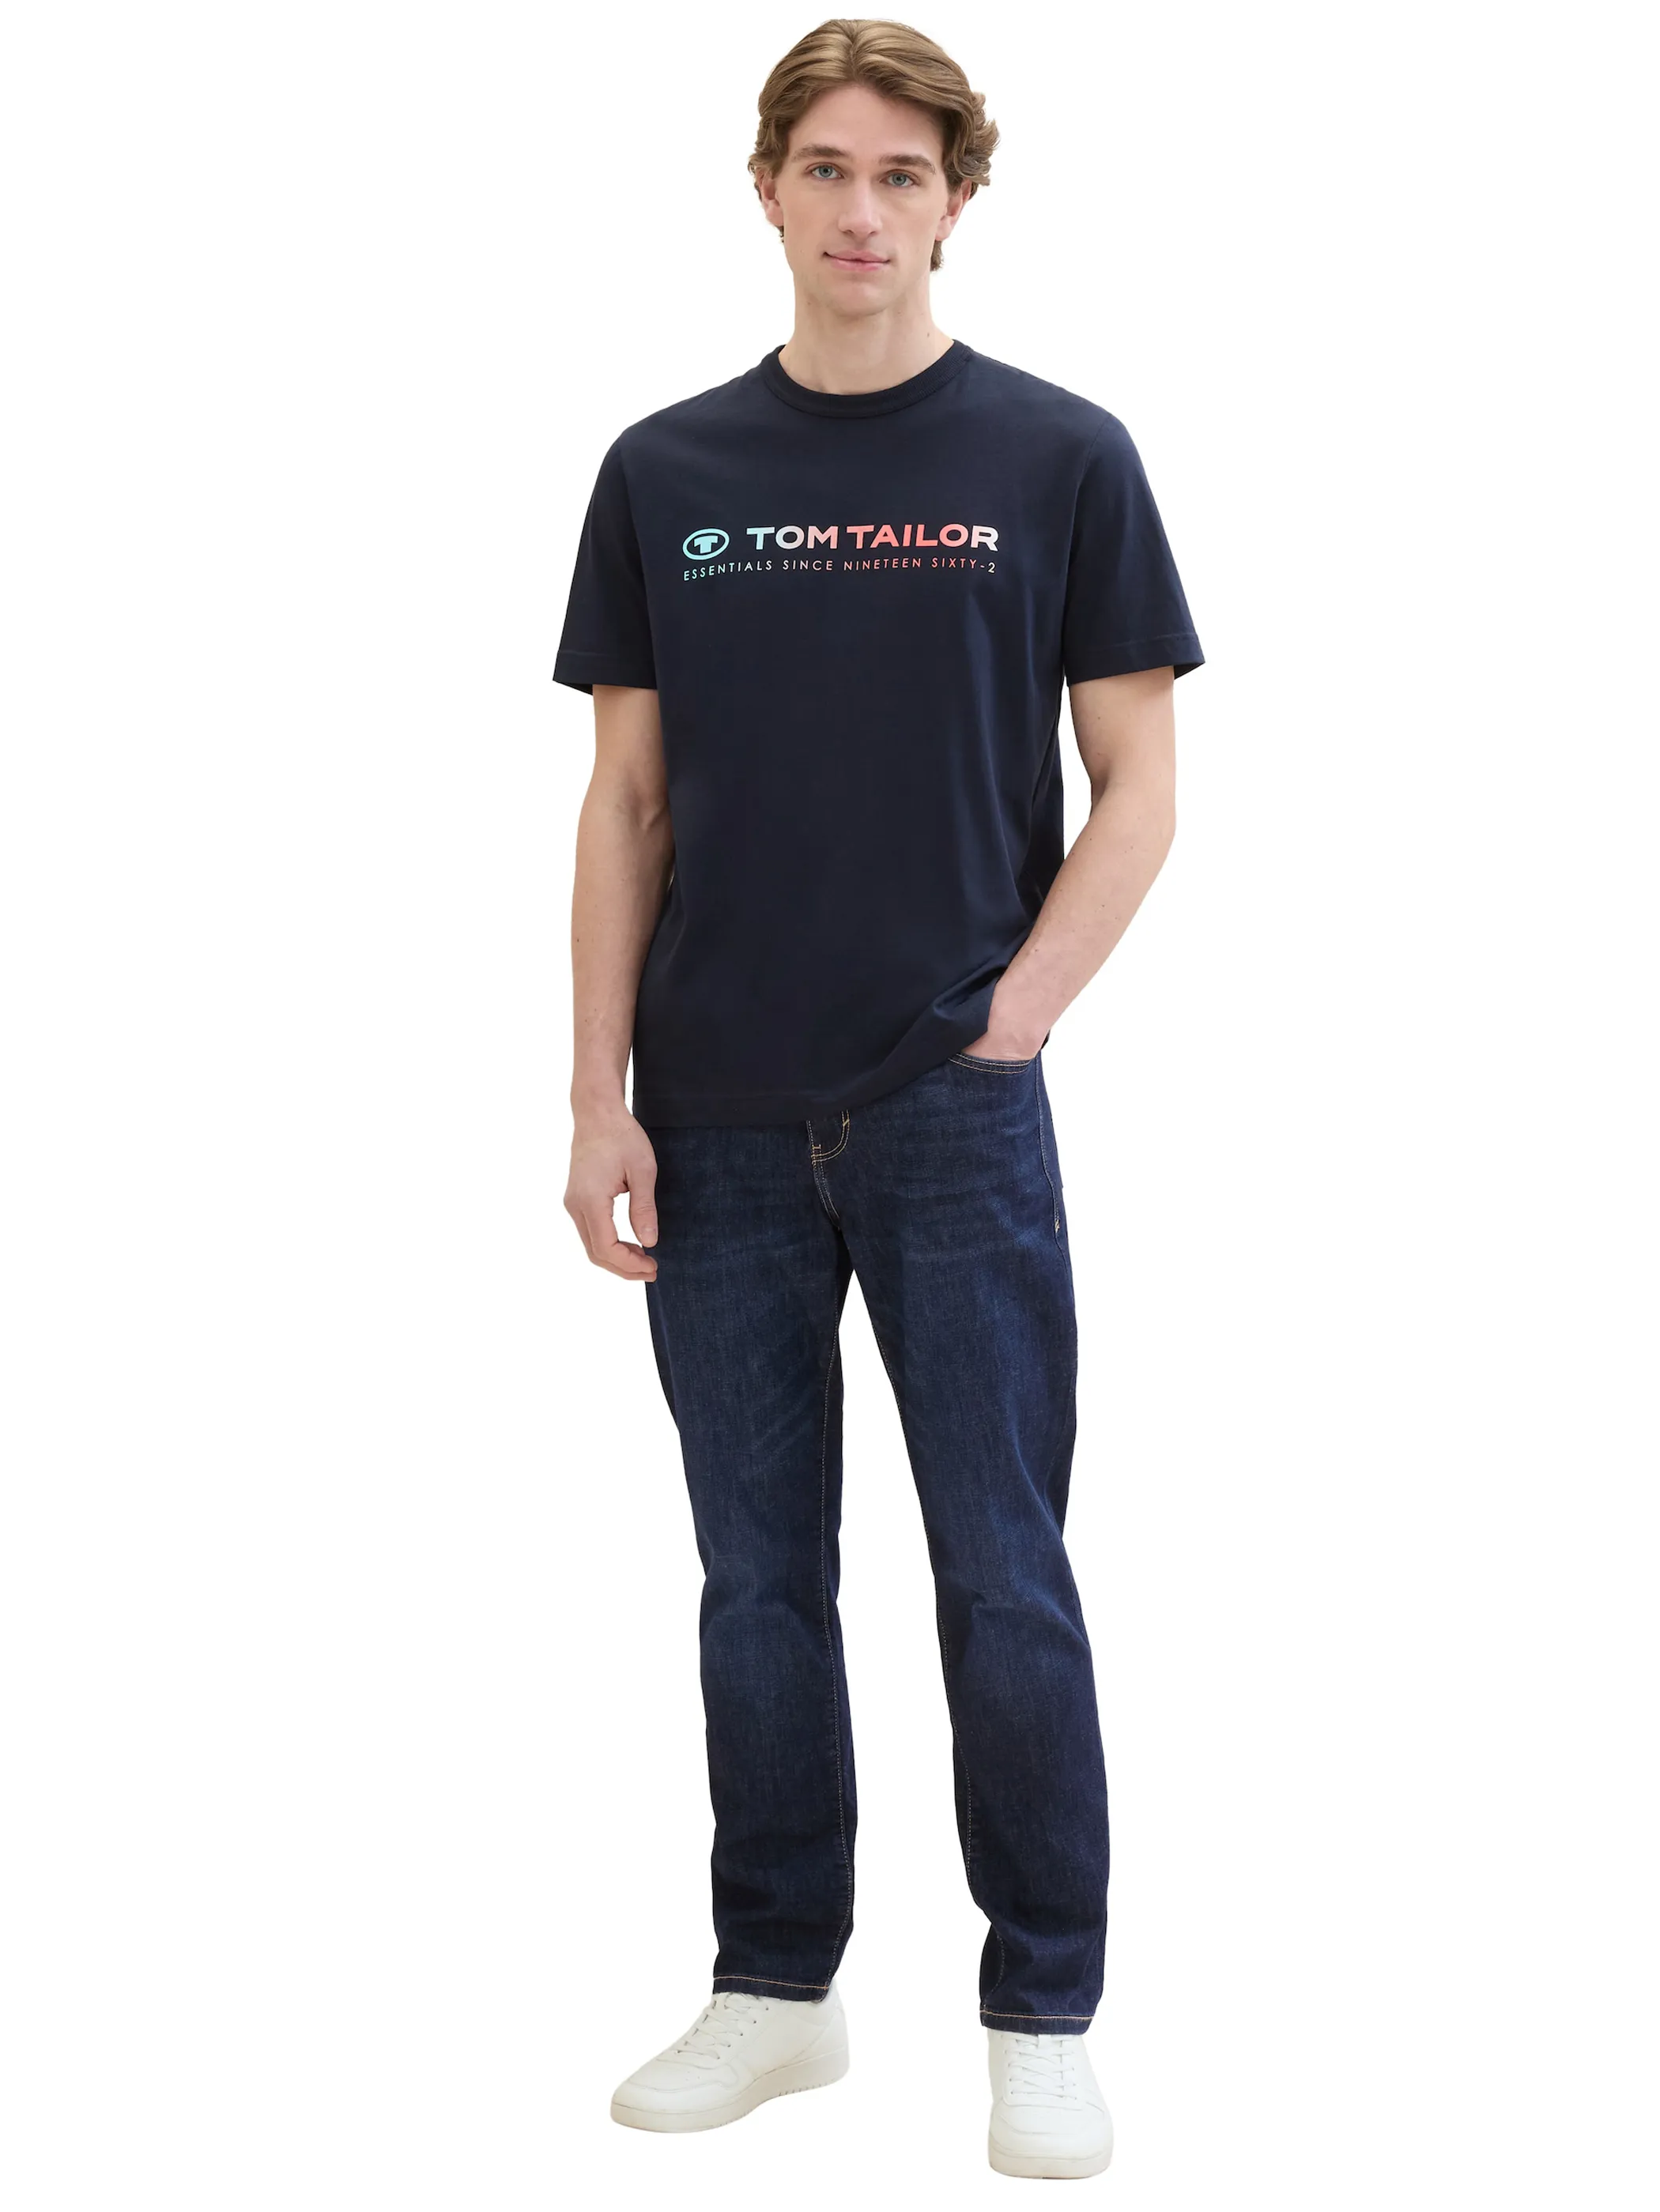 Tom Tailor 1041855 printed t-shirt Blau 895629 10668 4